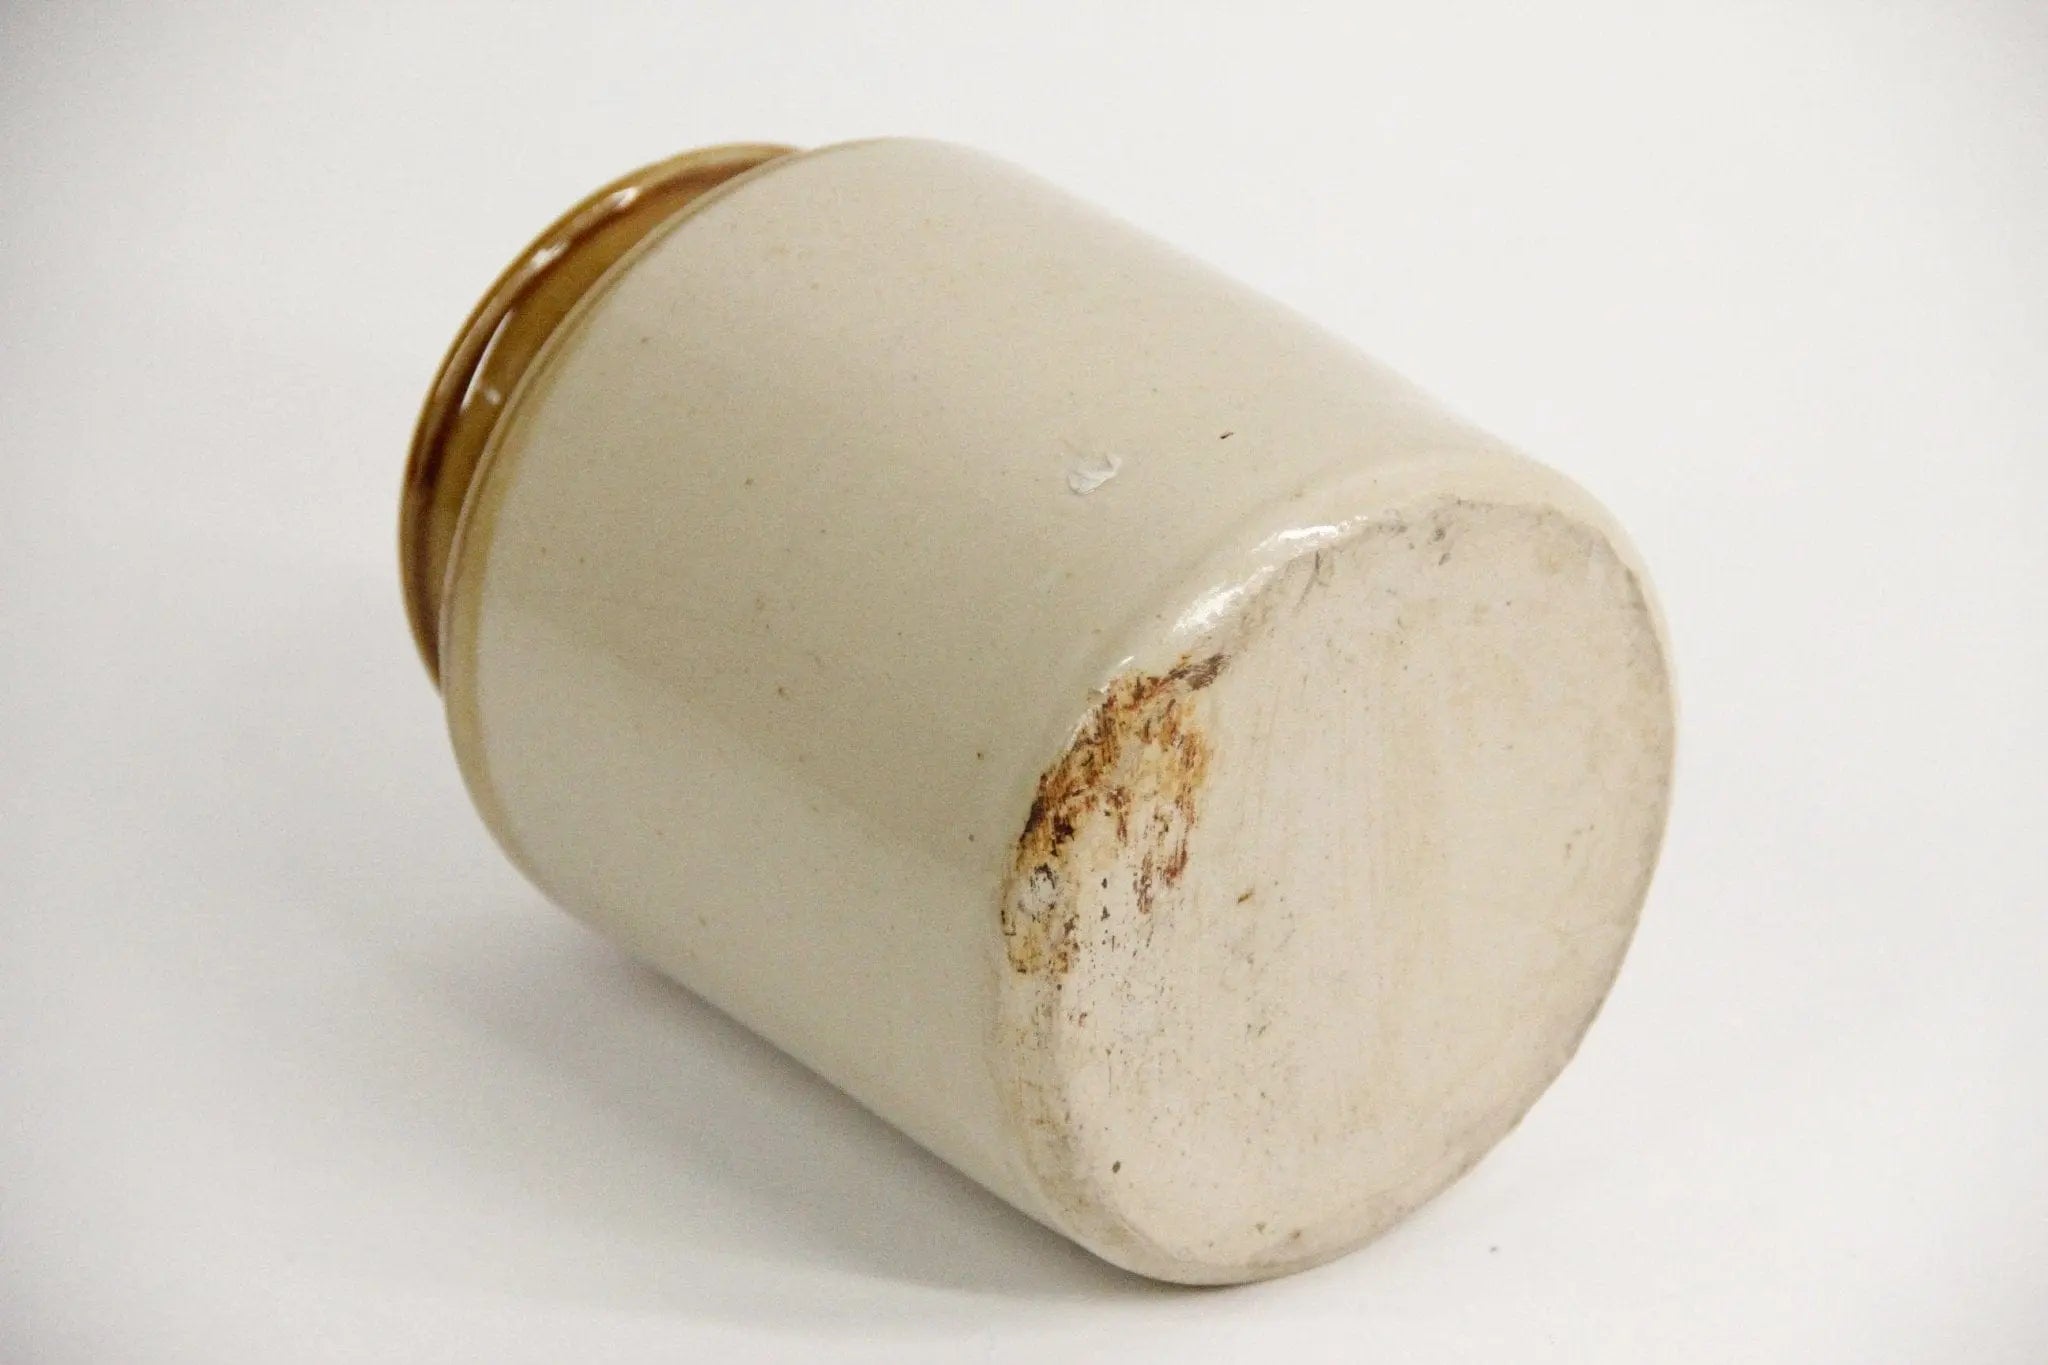 Antique Stoneware Canning Jars | England  Debra Hall Lifestyle